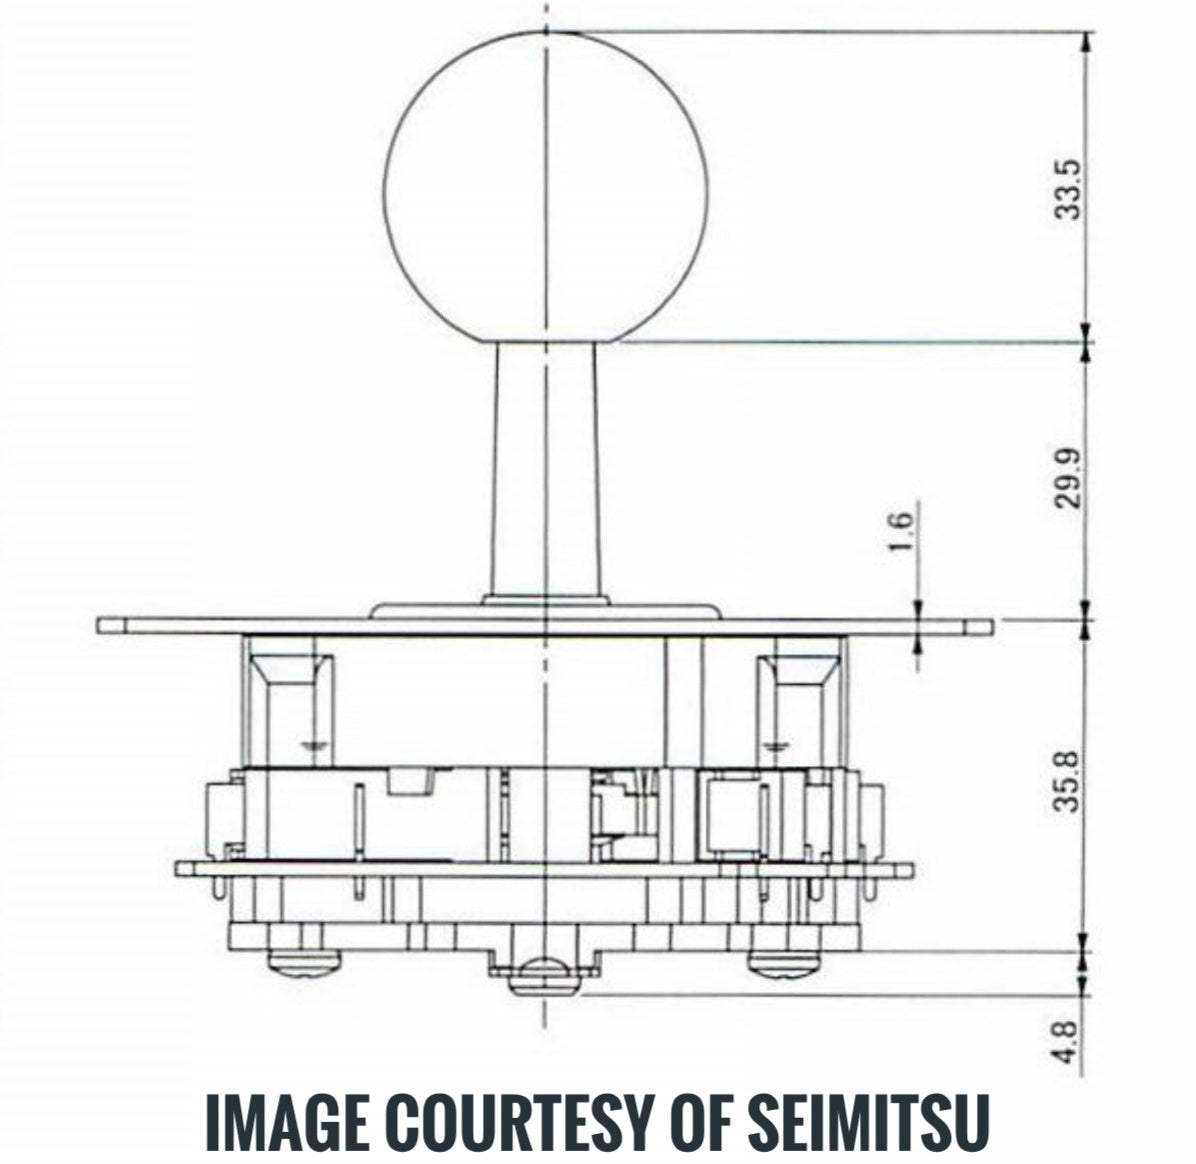 Semitsu LS-40-01 Joystick